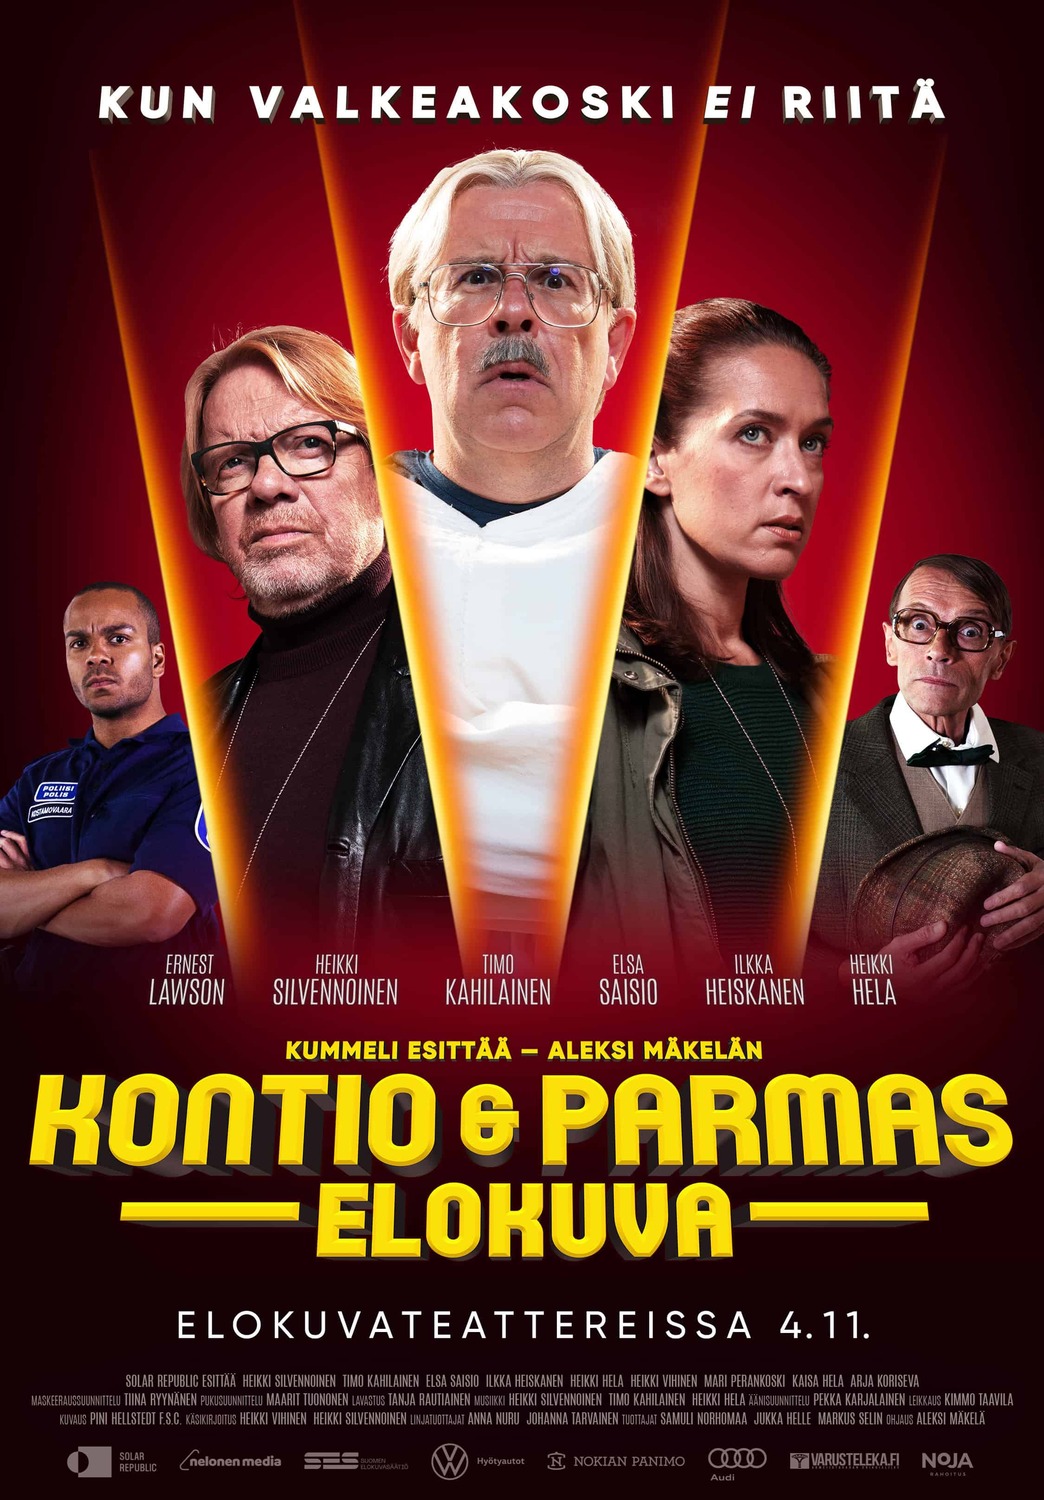 Extra Large Movie Poster Image for Kontio & Parmas -elokuva 